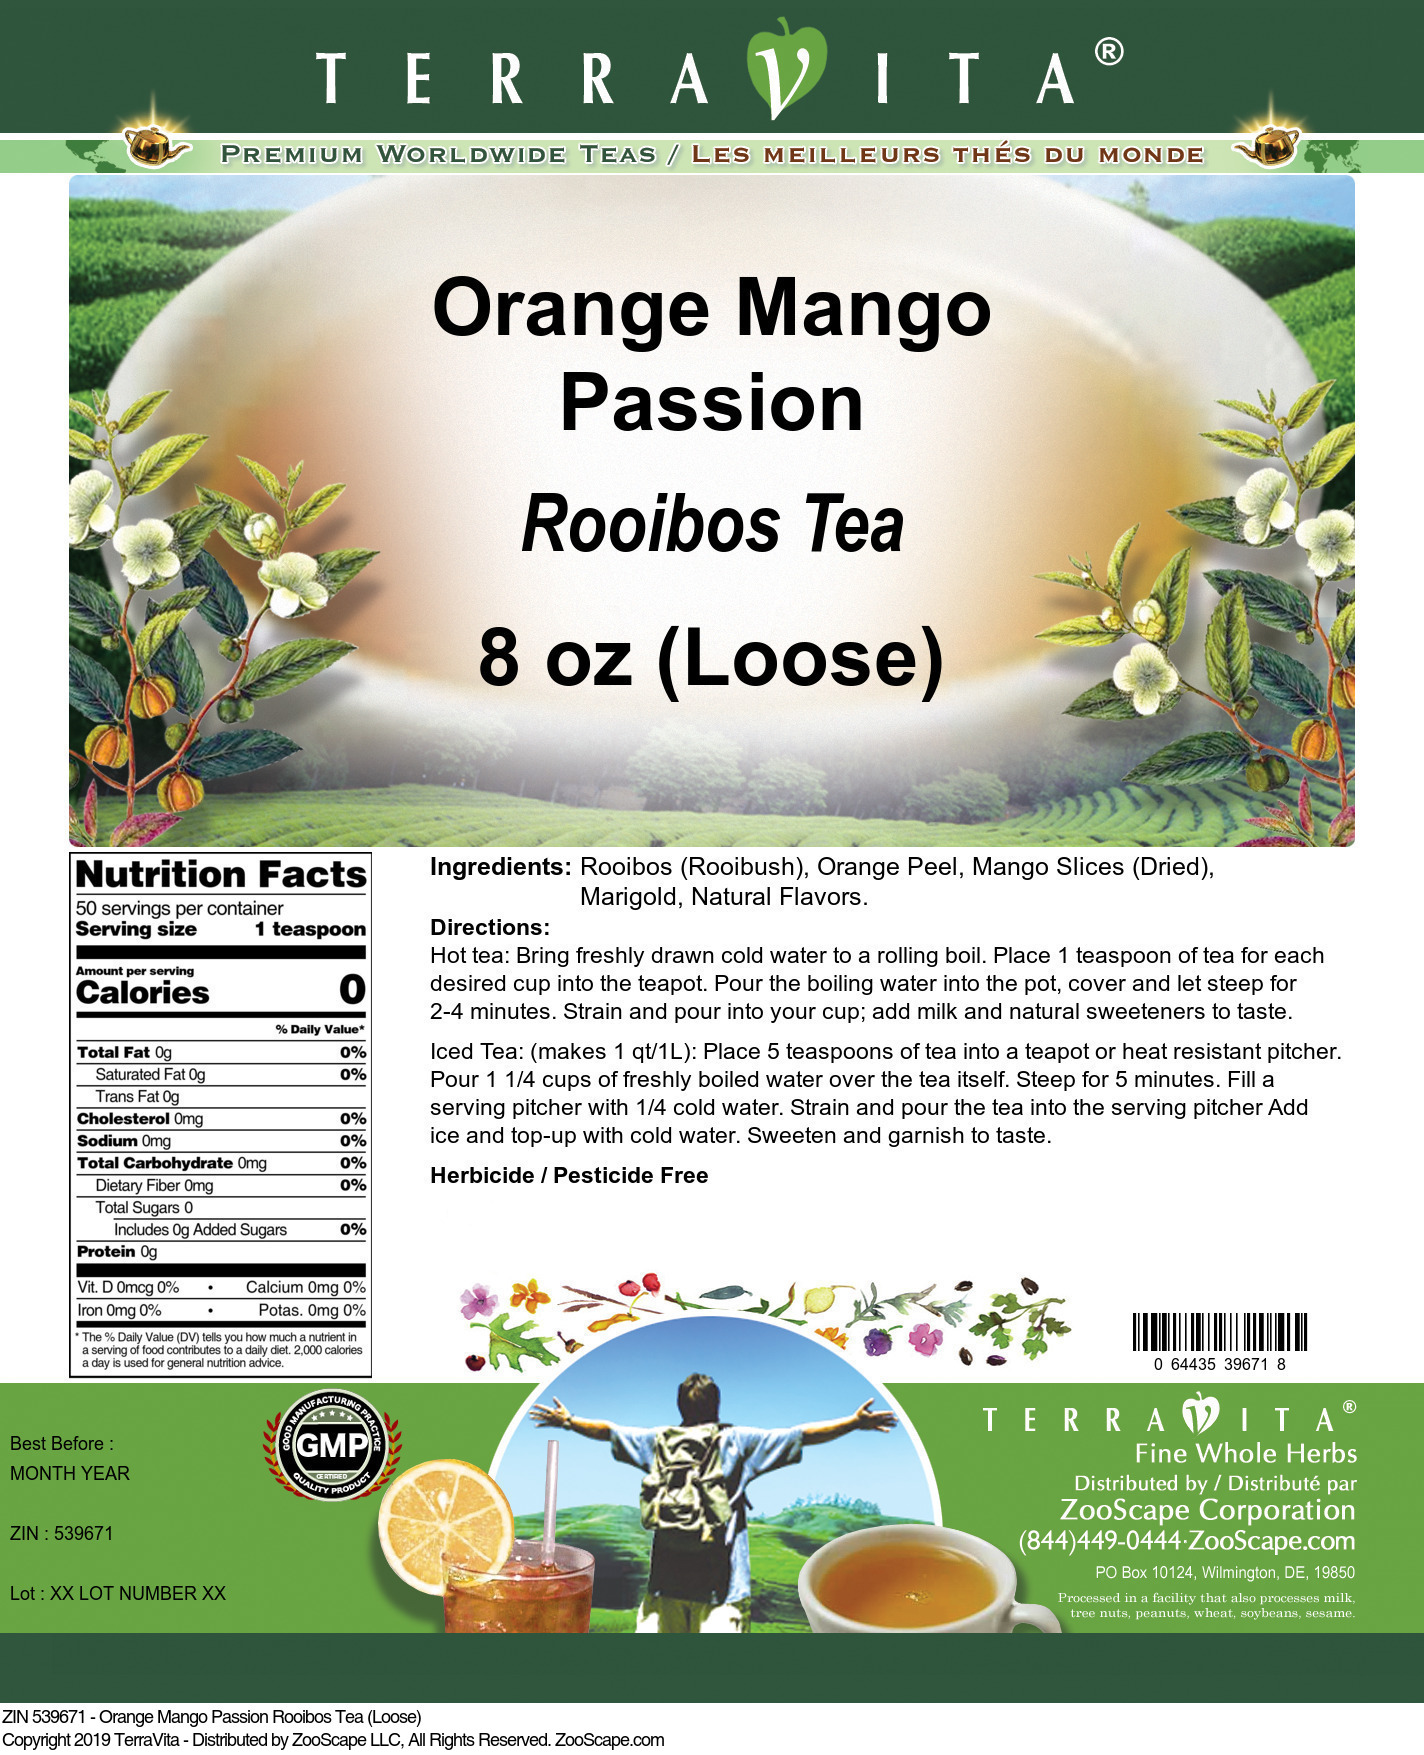 Orange Mango Passion Rooibos Tea (Loose) - Label